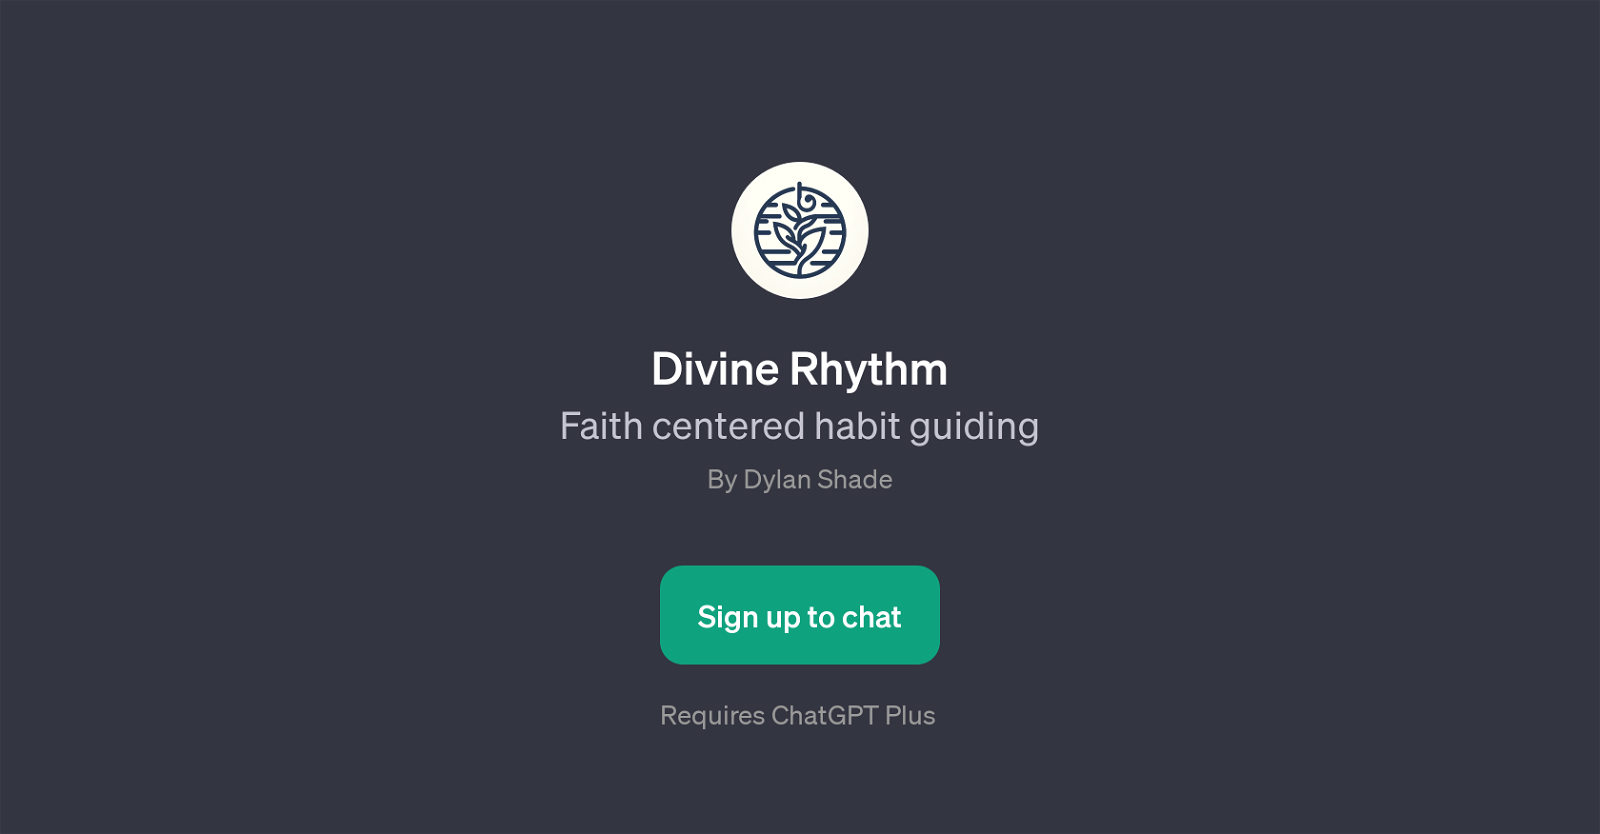 Divine Rhythm website